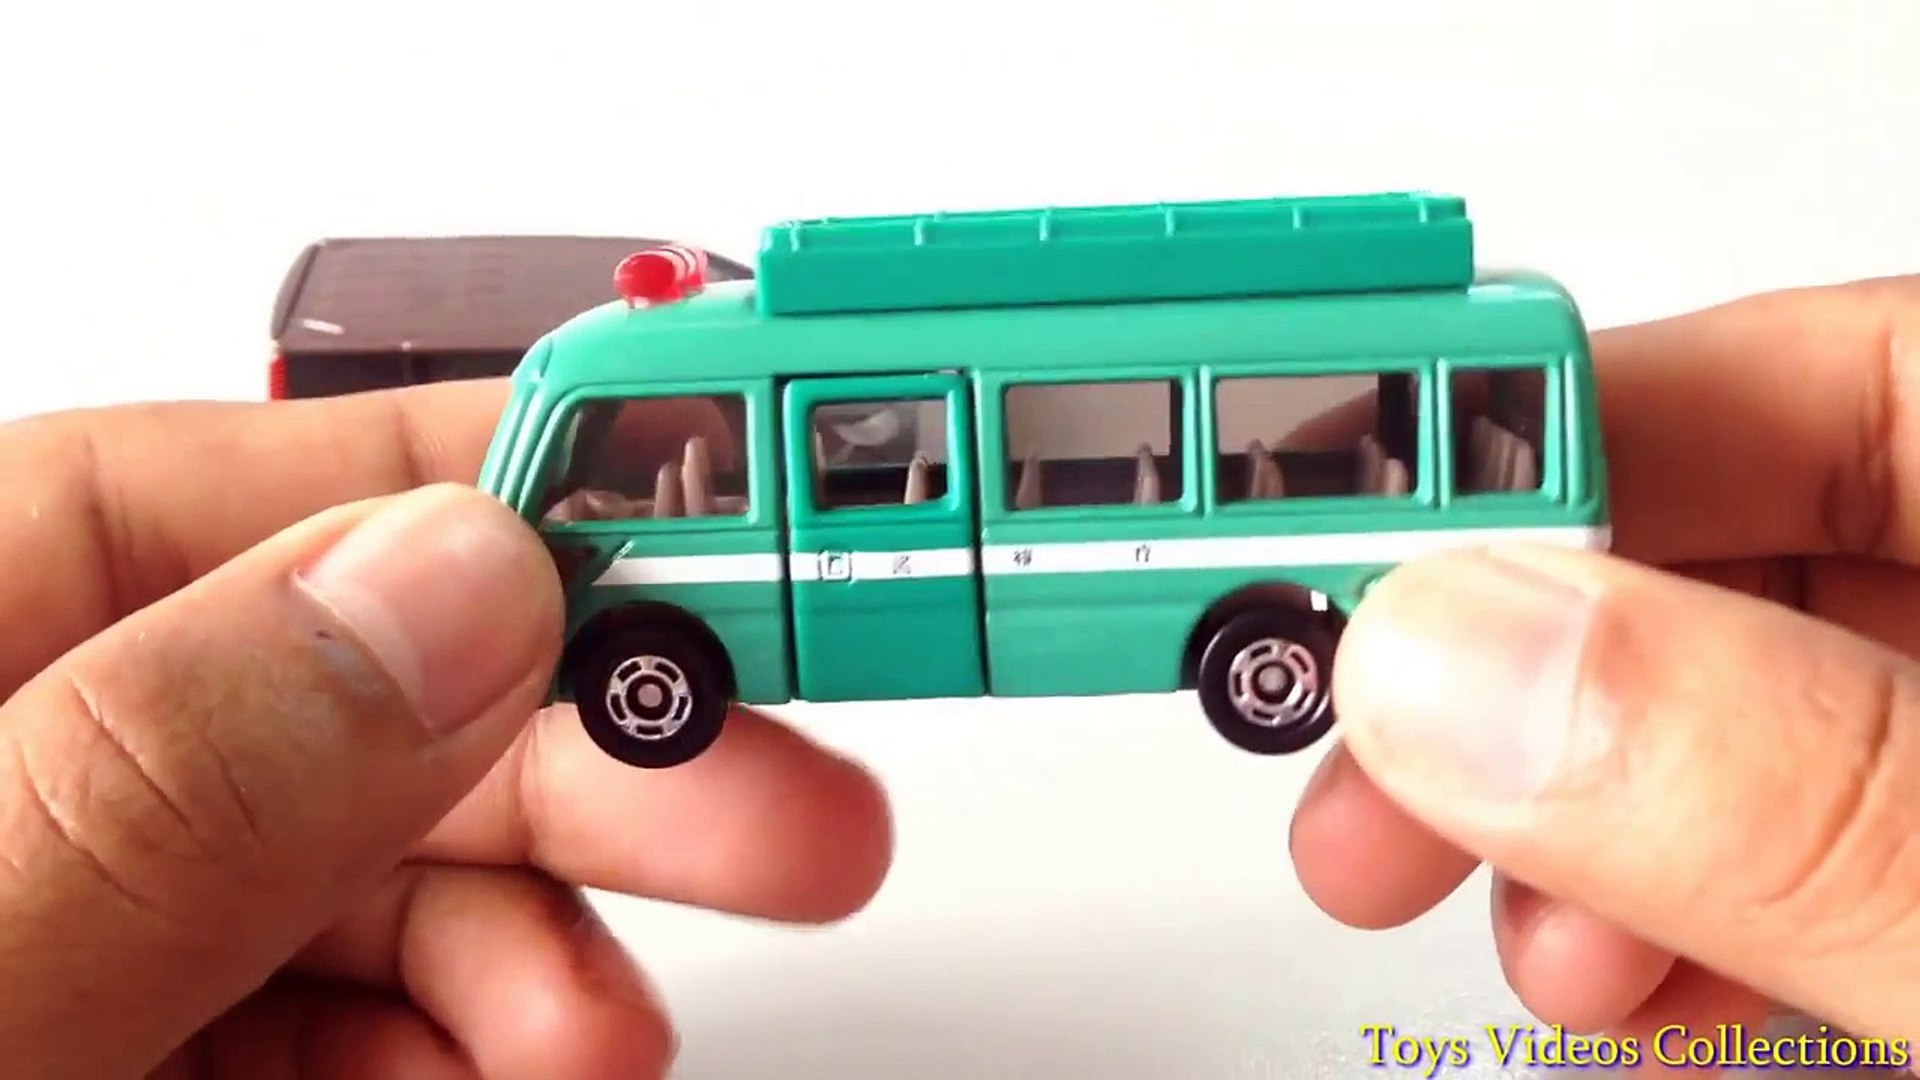 vehicle toys videos